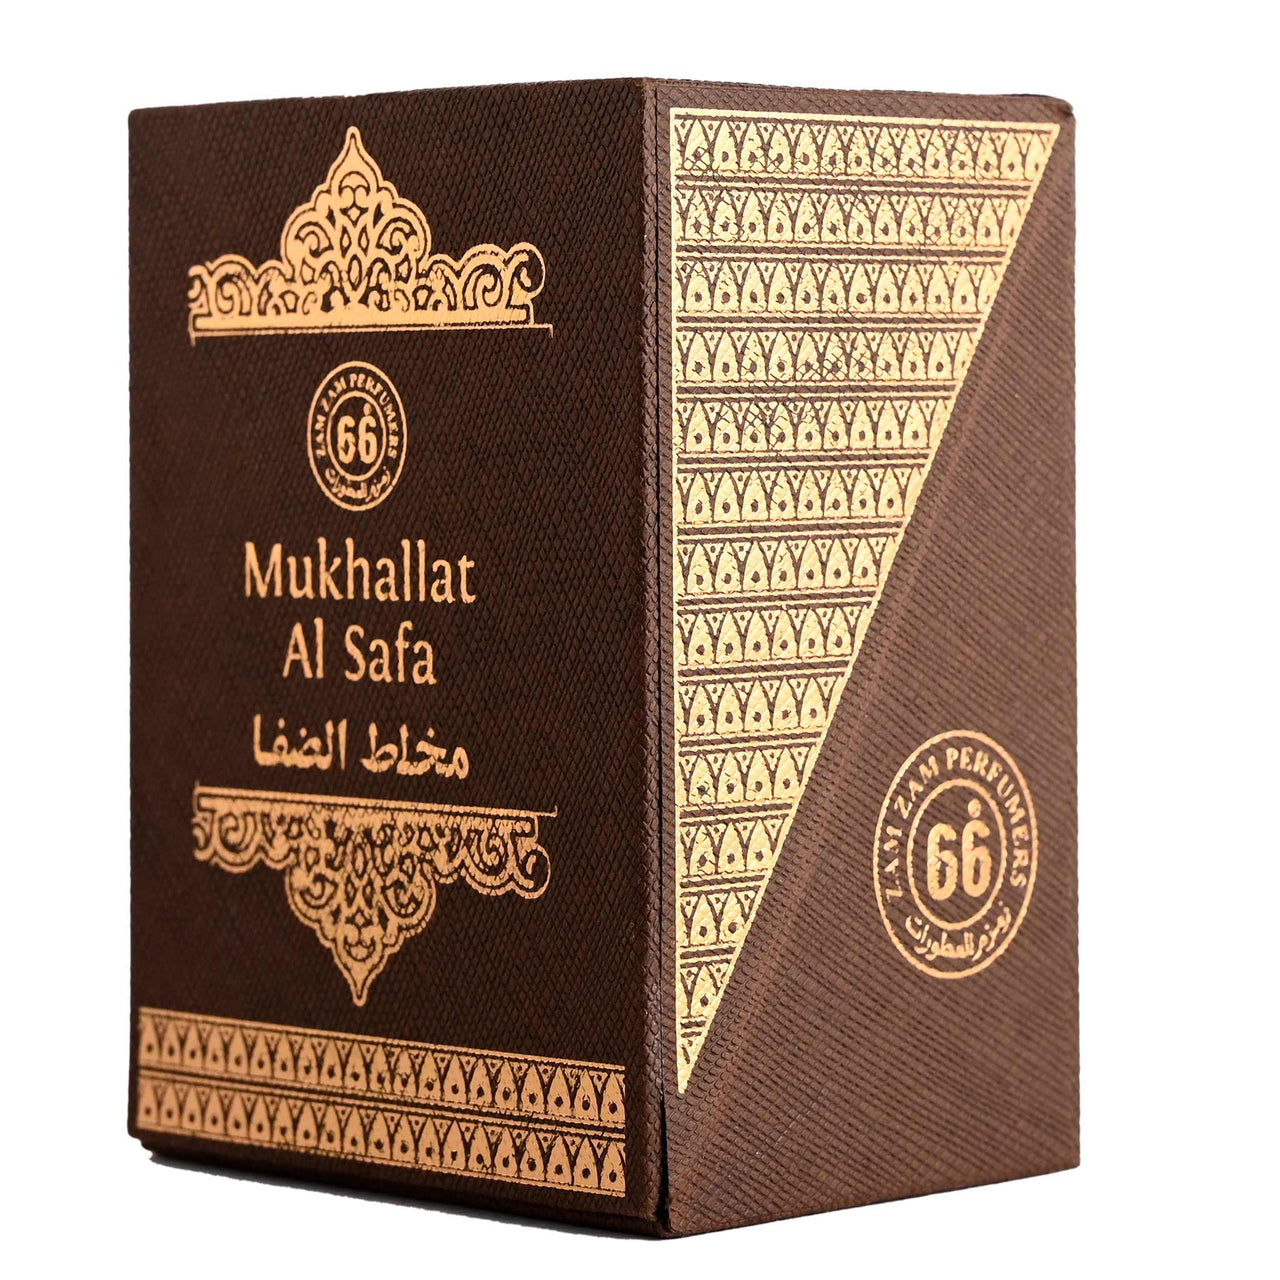 Mukhallat Al Safa